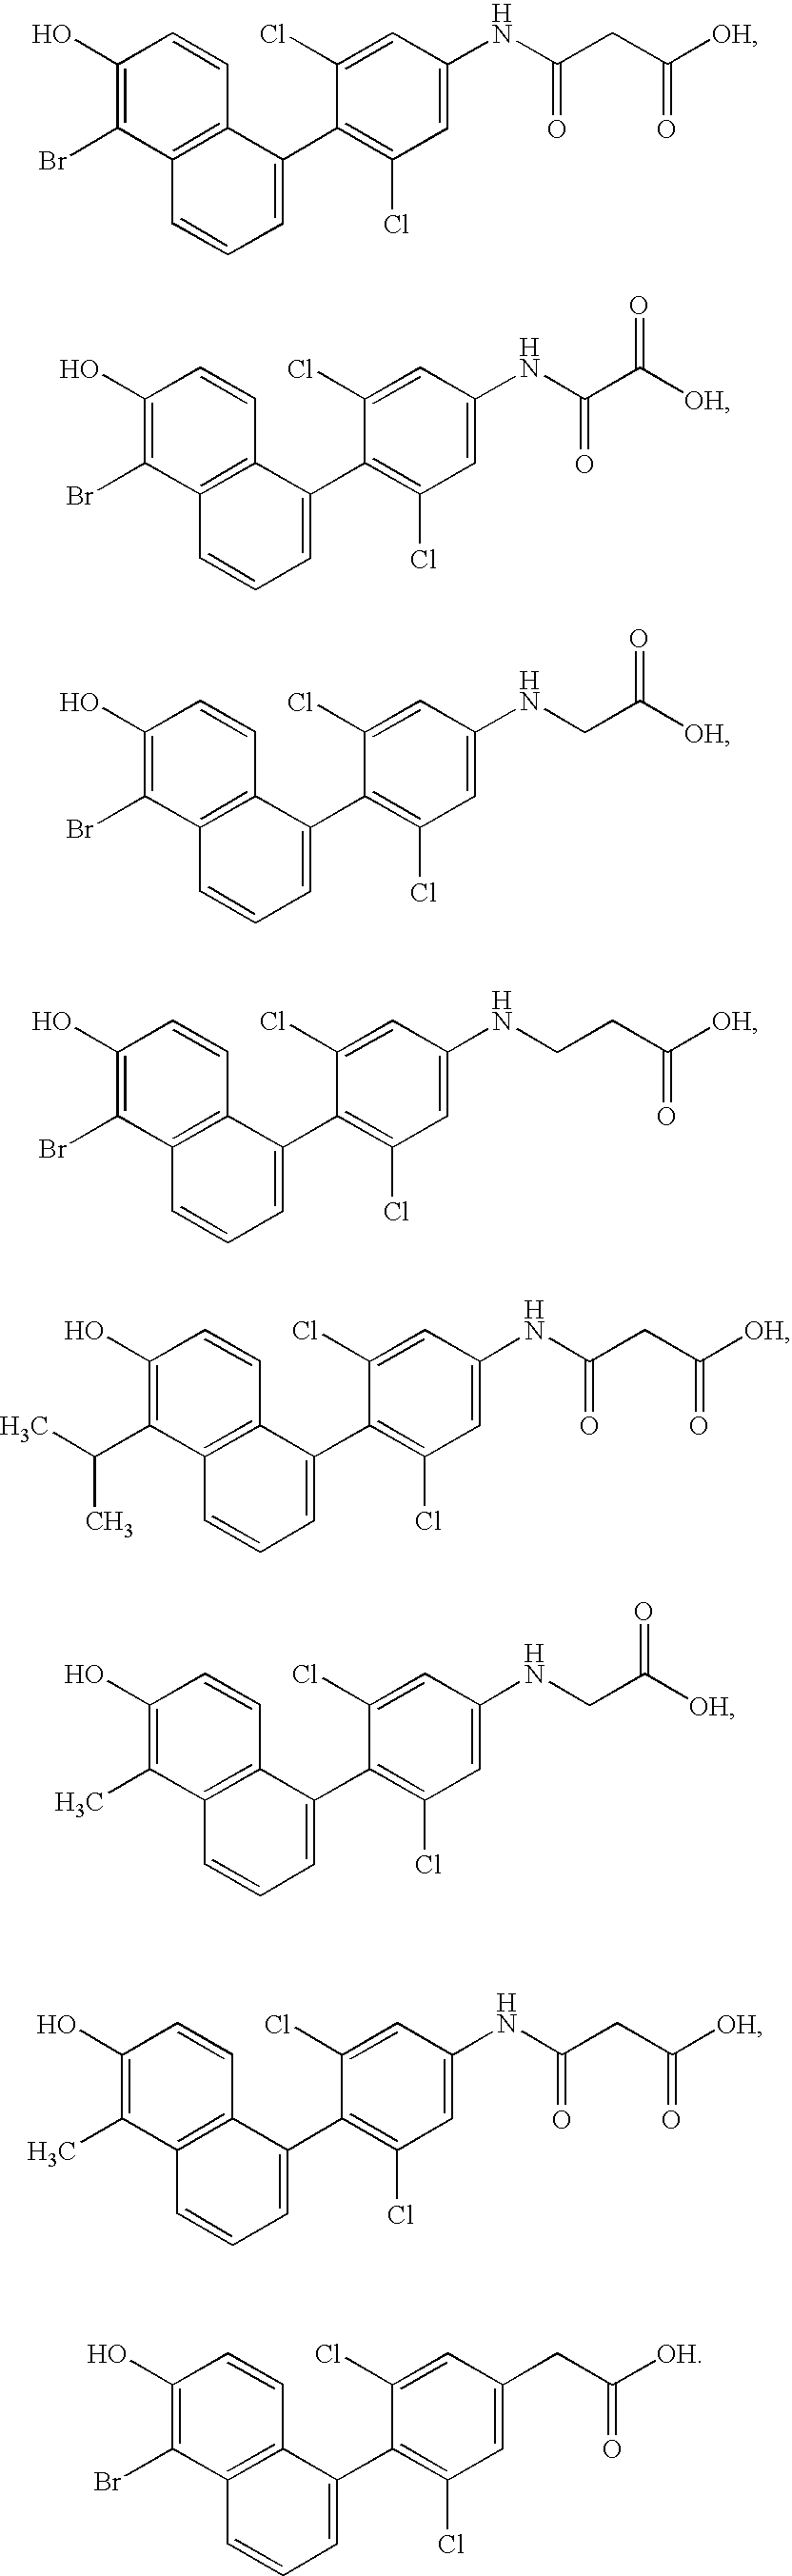 Phenyl naphthol ligands for thyroid hormone receptor